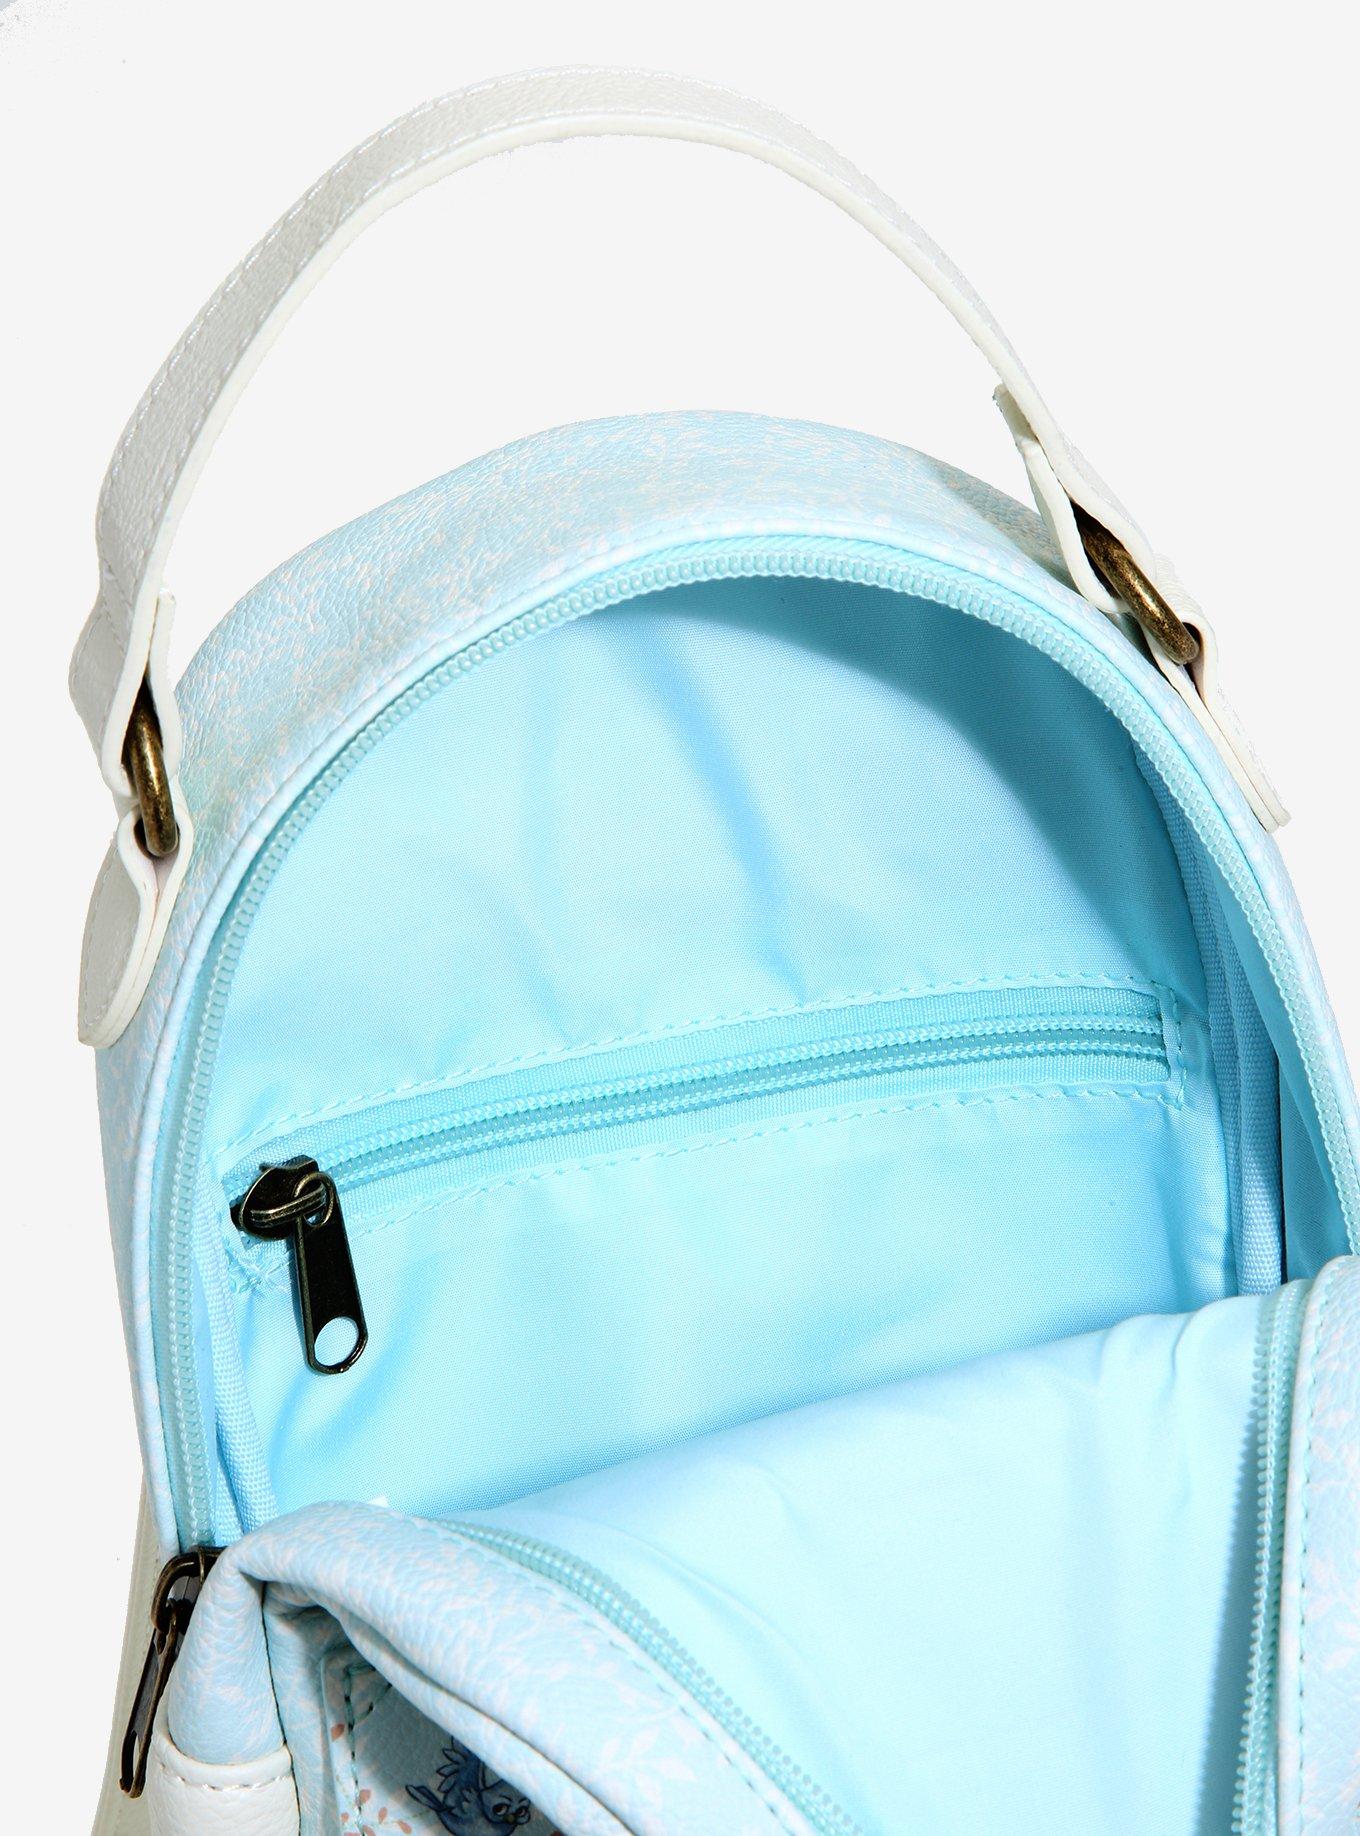 Loungefly Disney Sleeping Beauty Aurora Mini Backpack, , alternate